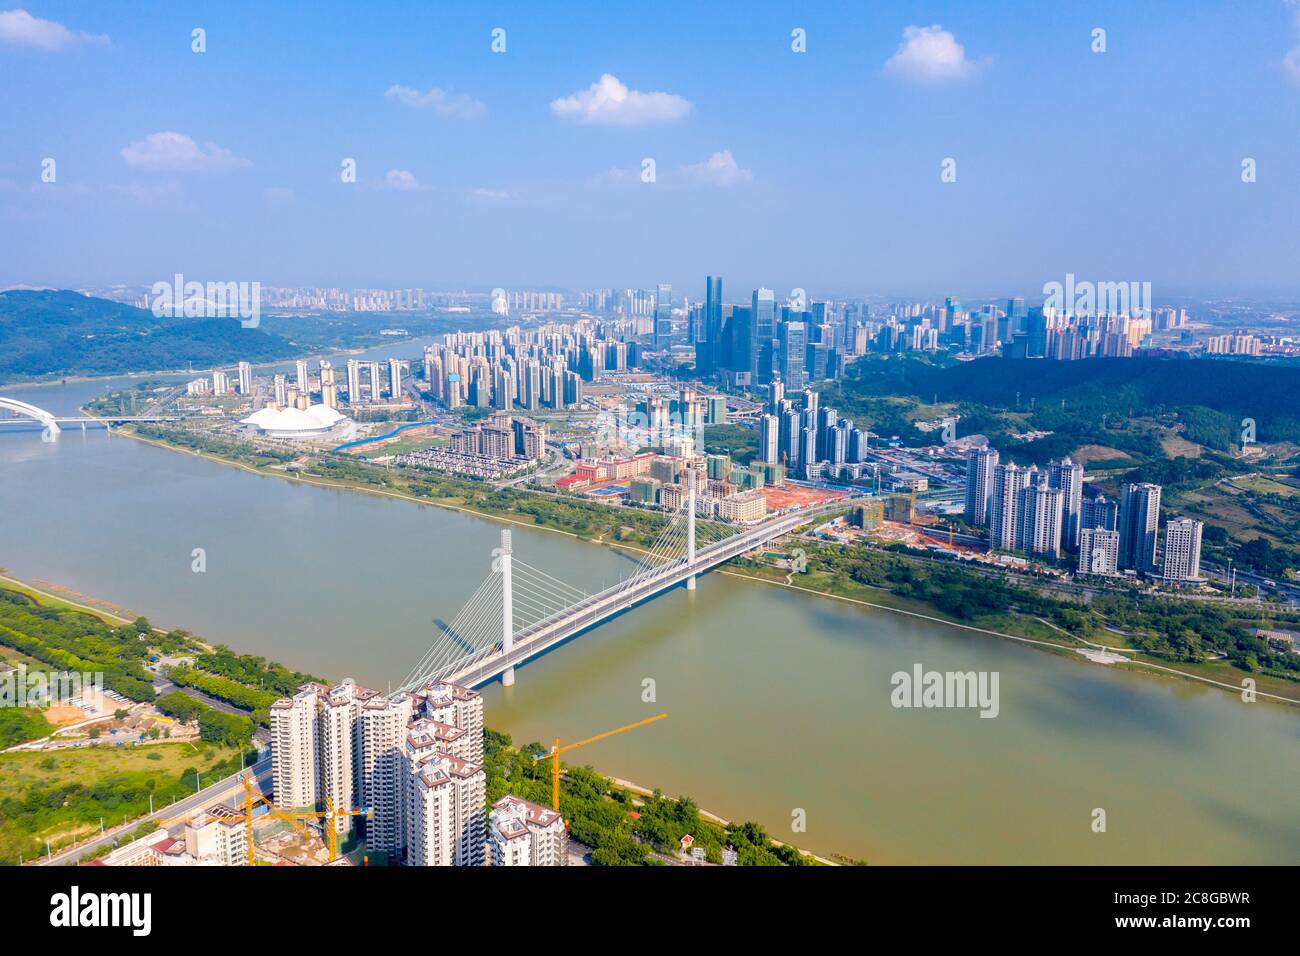 Luftaufnahme der Stadt Nanning Provinz Guangxi, china.Panorama Skyline und Gebäude neben Yongjiang Fluss. Stockfoto